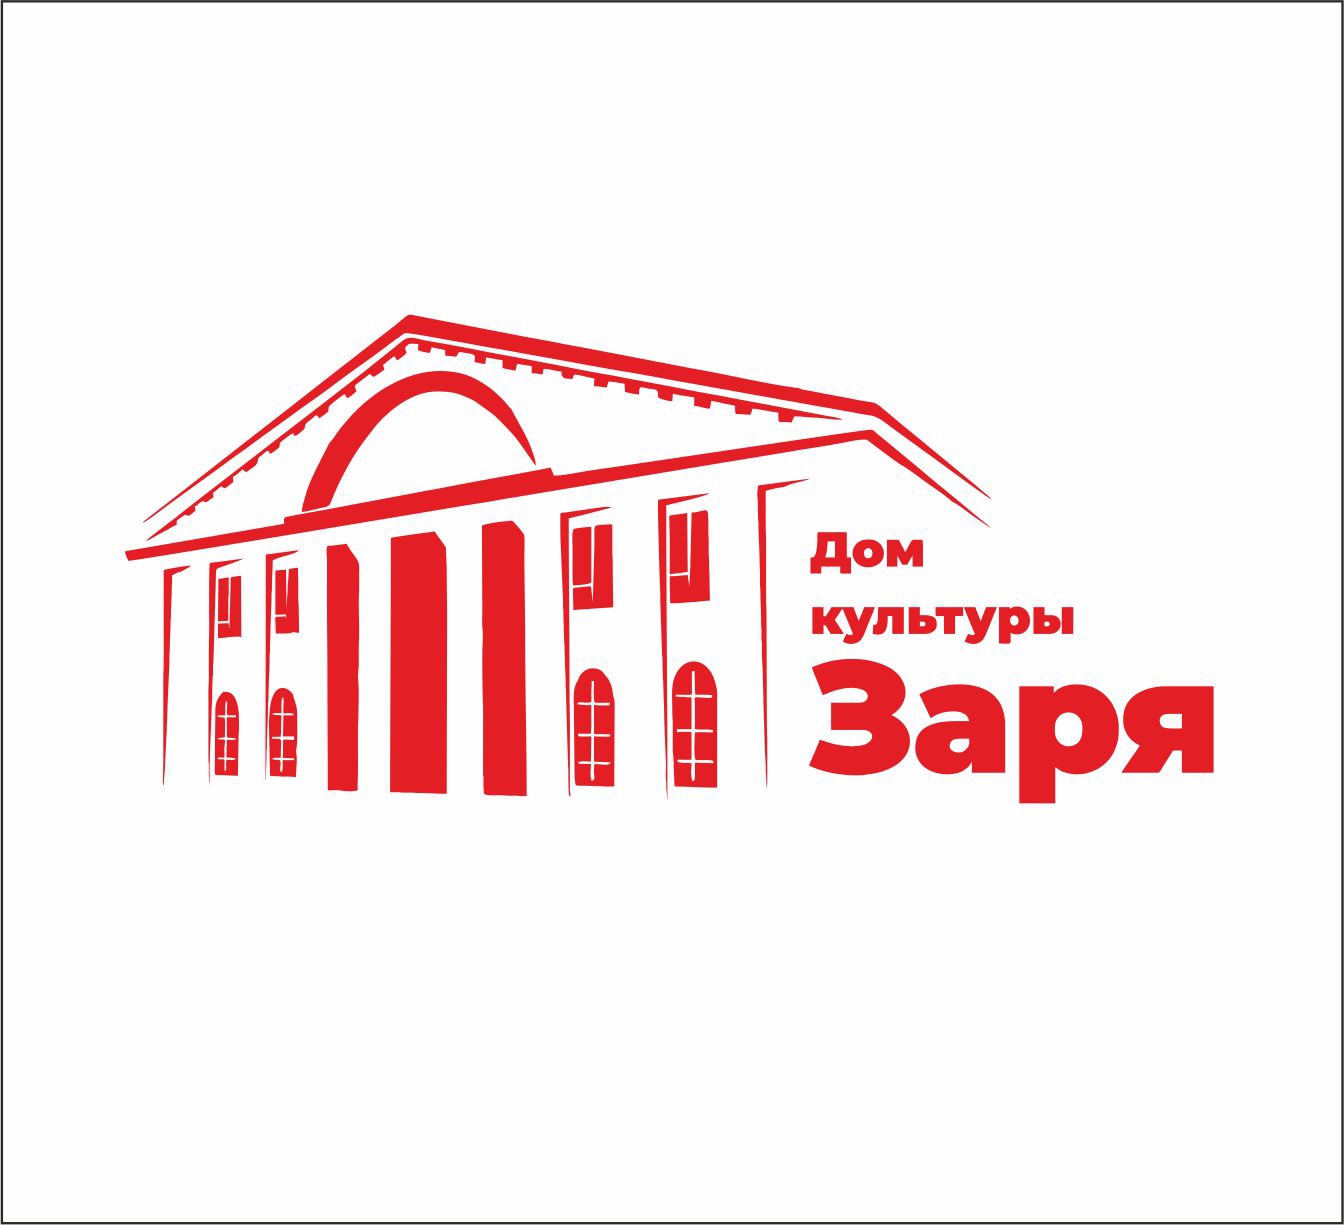 Логотип Дом культуры "Заря"